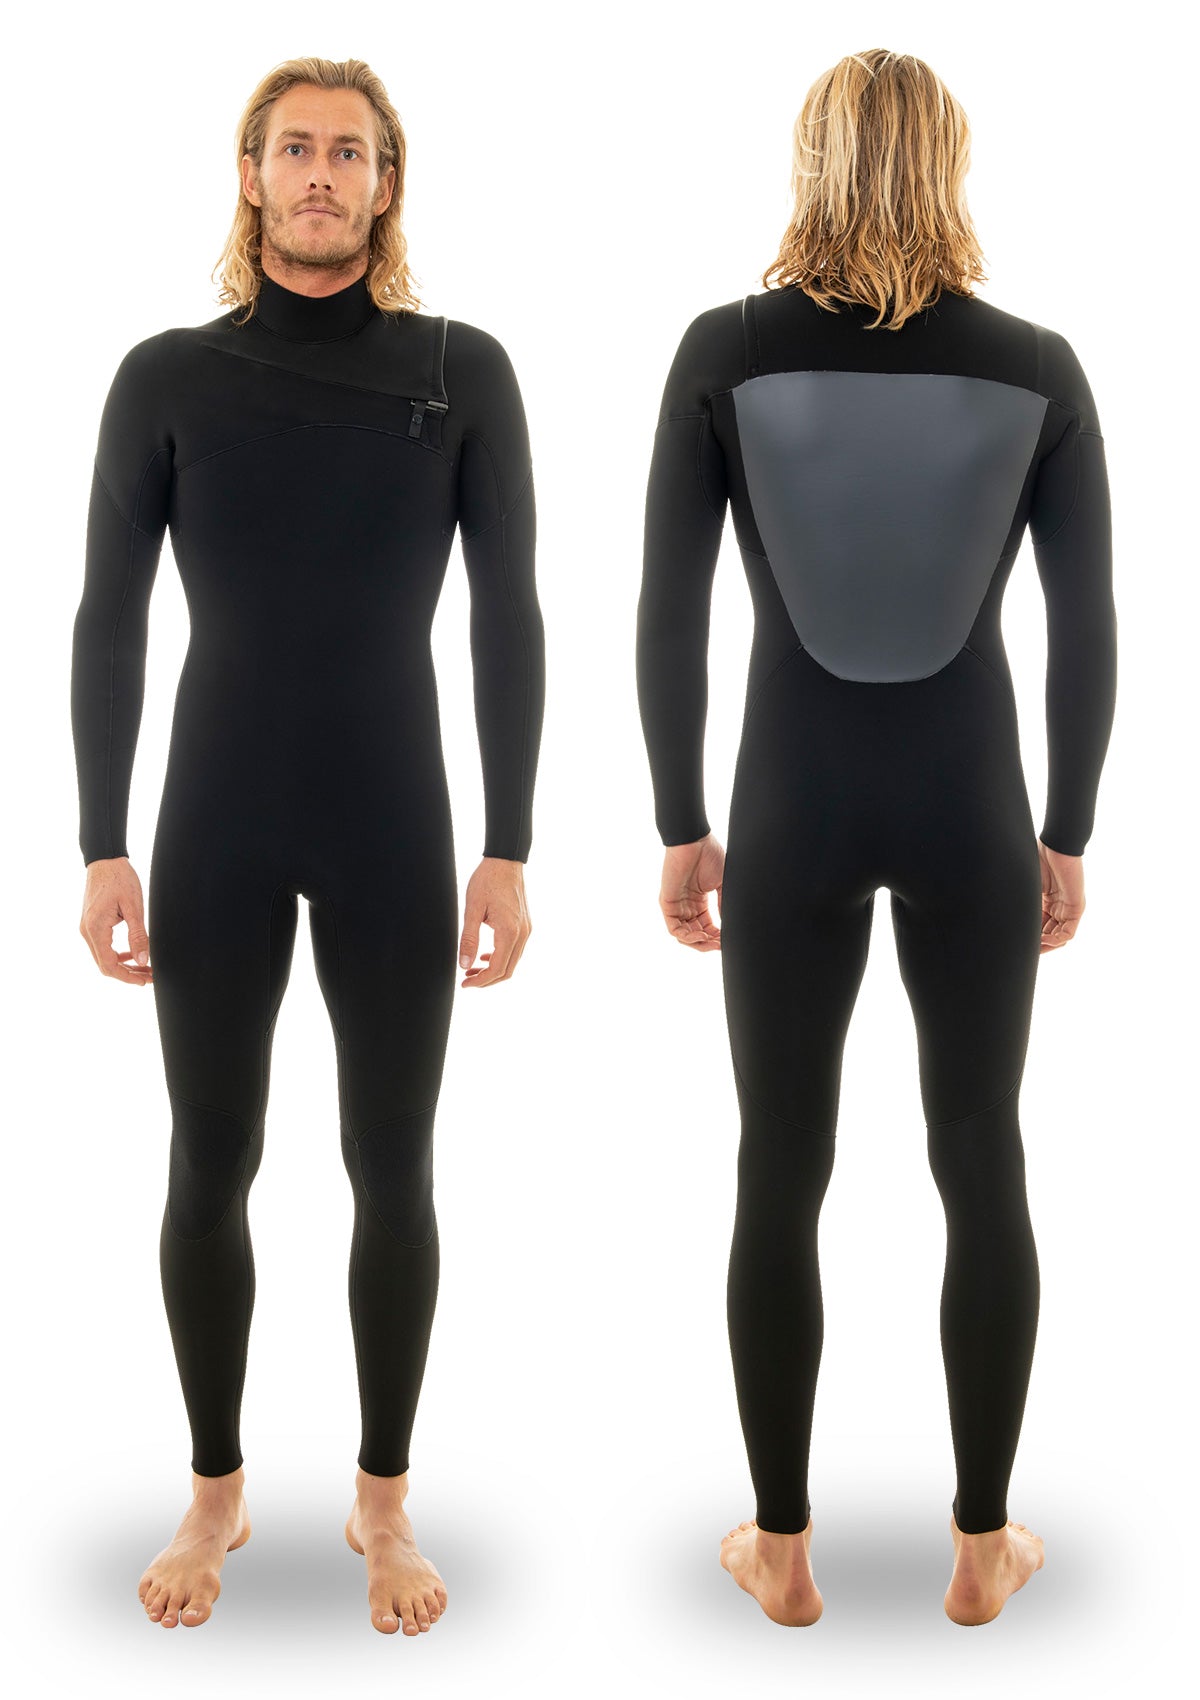 needessentials 4/3 chest zip thermal wetsuit torren martyn surfing winter black non branded